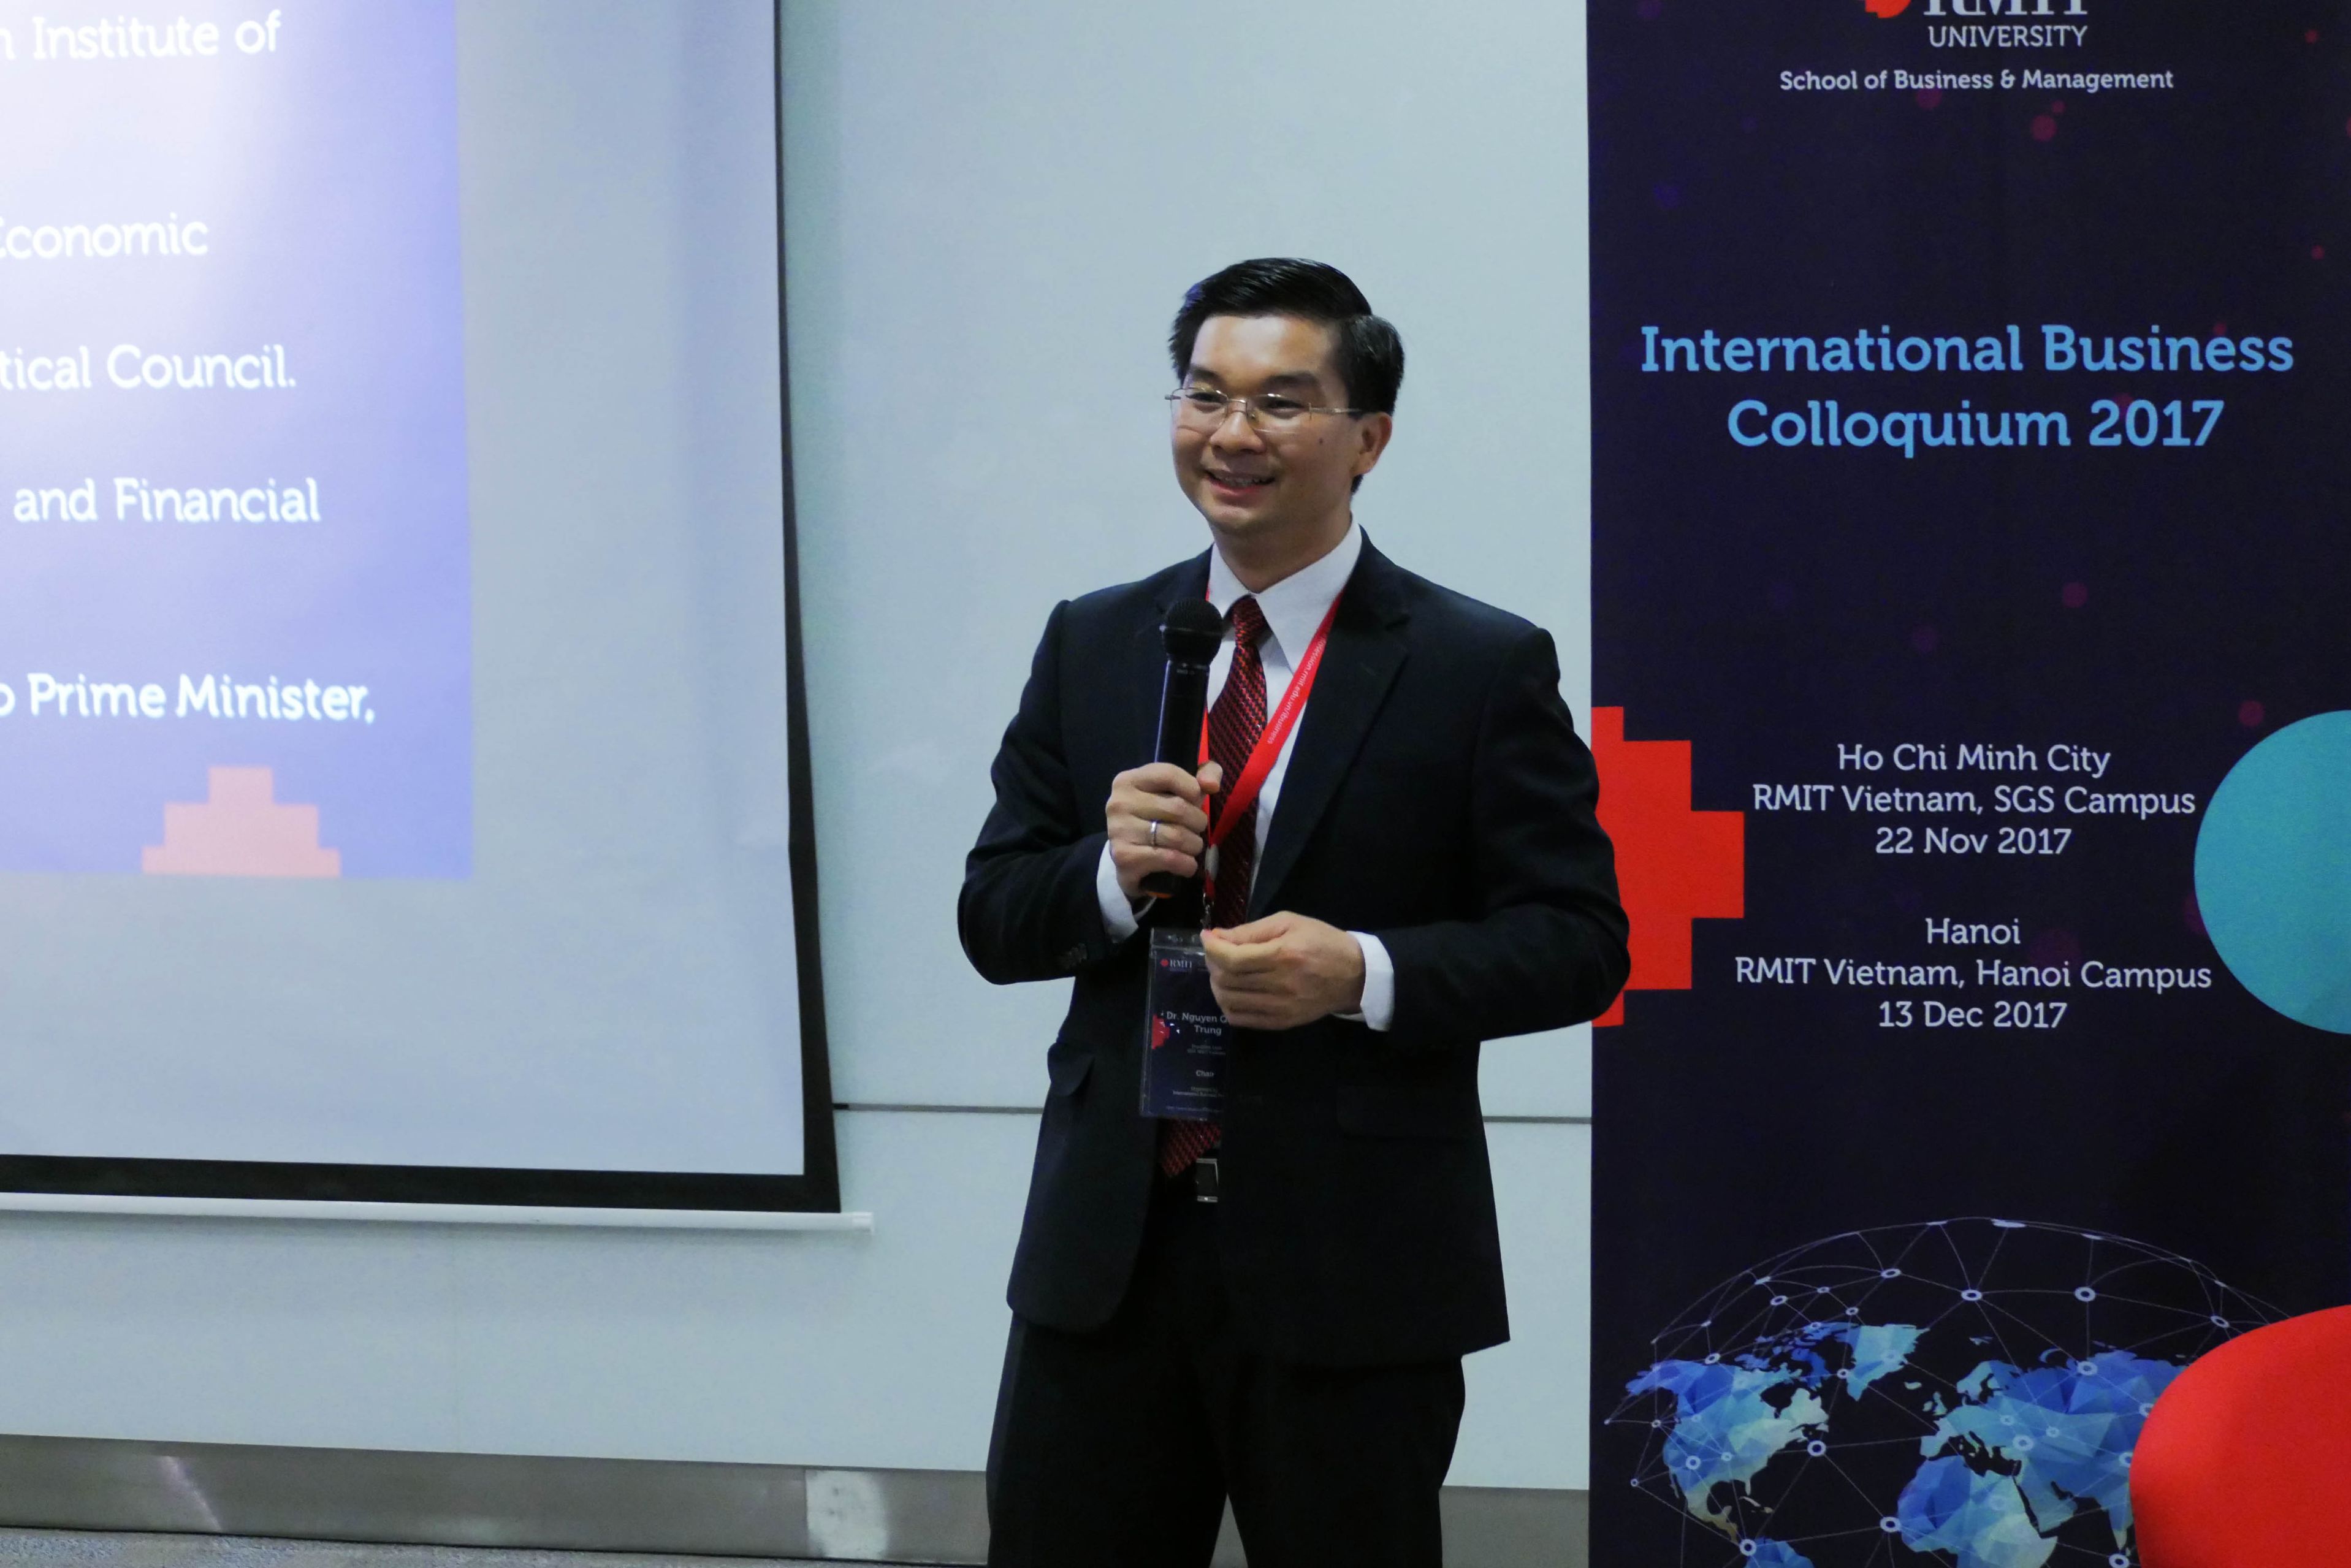 RMIT Vietnam's Discipline Lead of International Business, Dr Nguyen Quang Trung presented on Vietnam International Business environment.